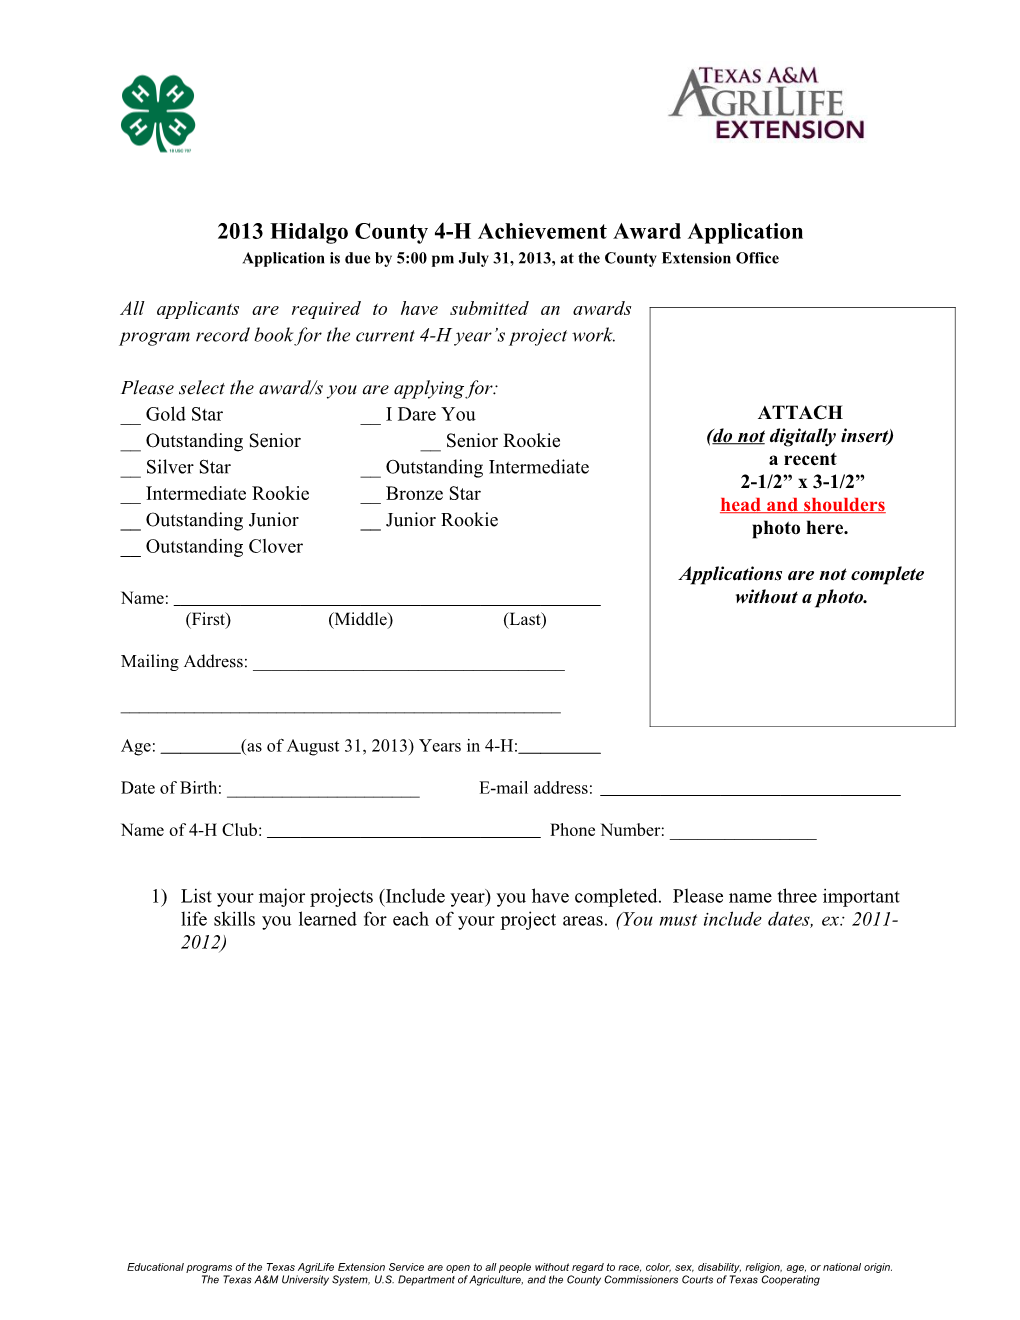 2013Hidalgo County 4-H Achievement Award Application